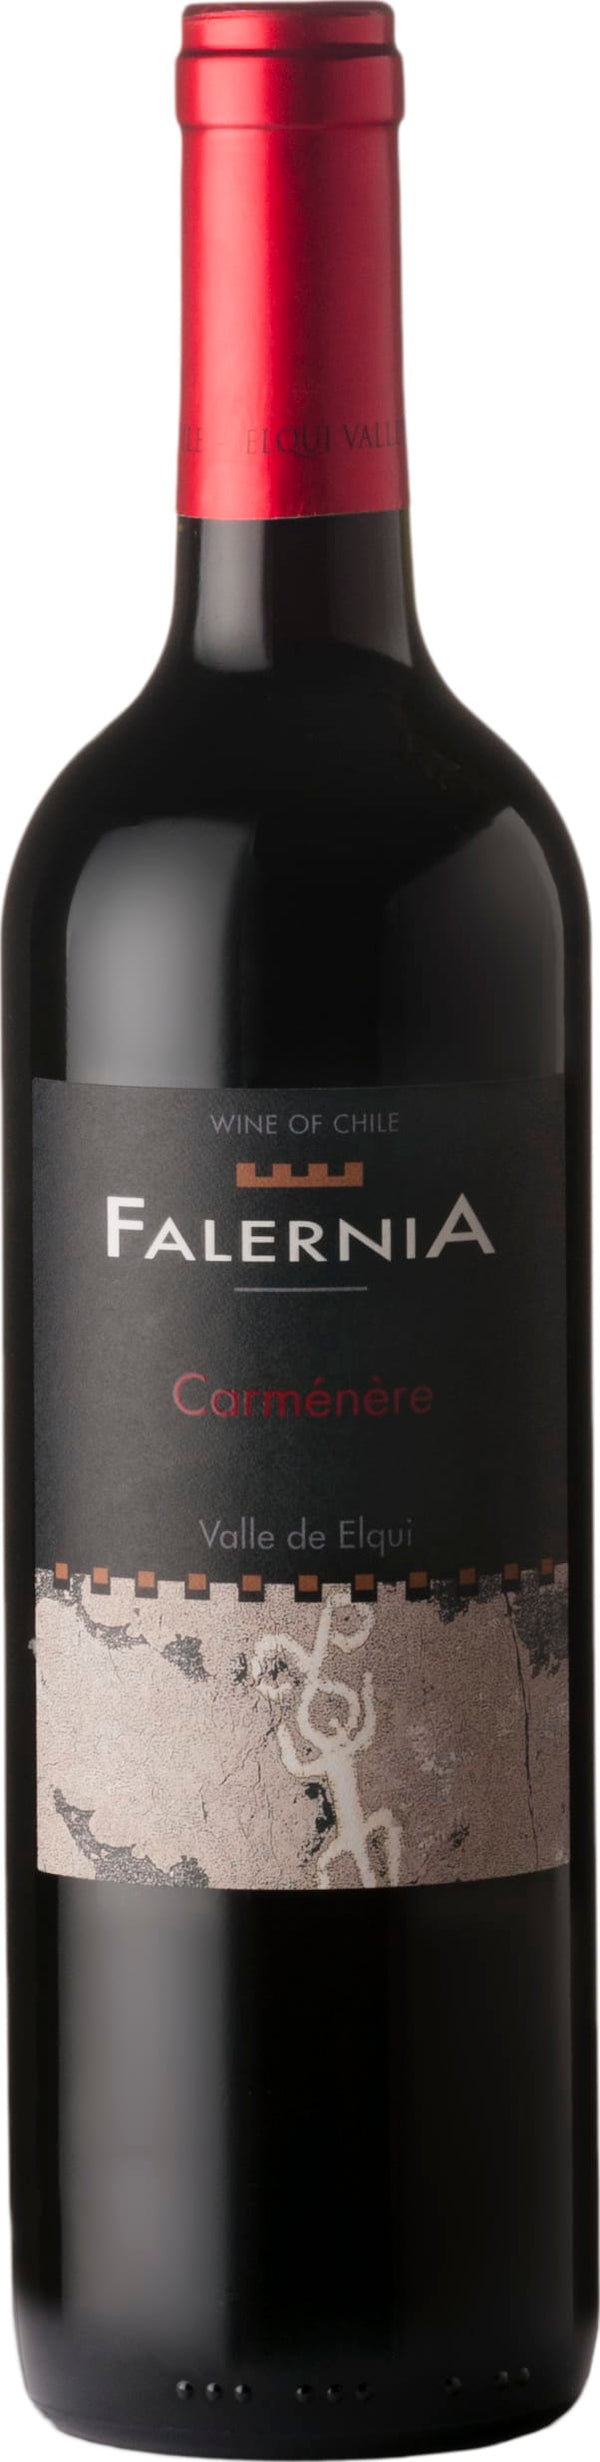 Vina Falernia Carmenere Reserva 2019 6x75cl - Just Wines 